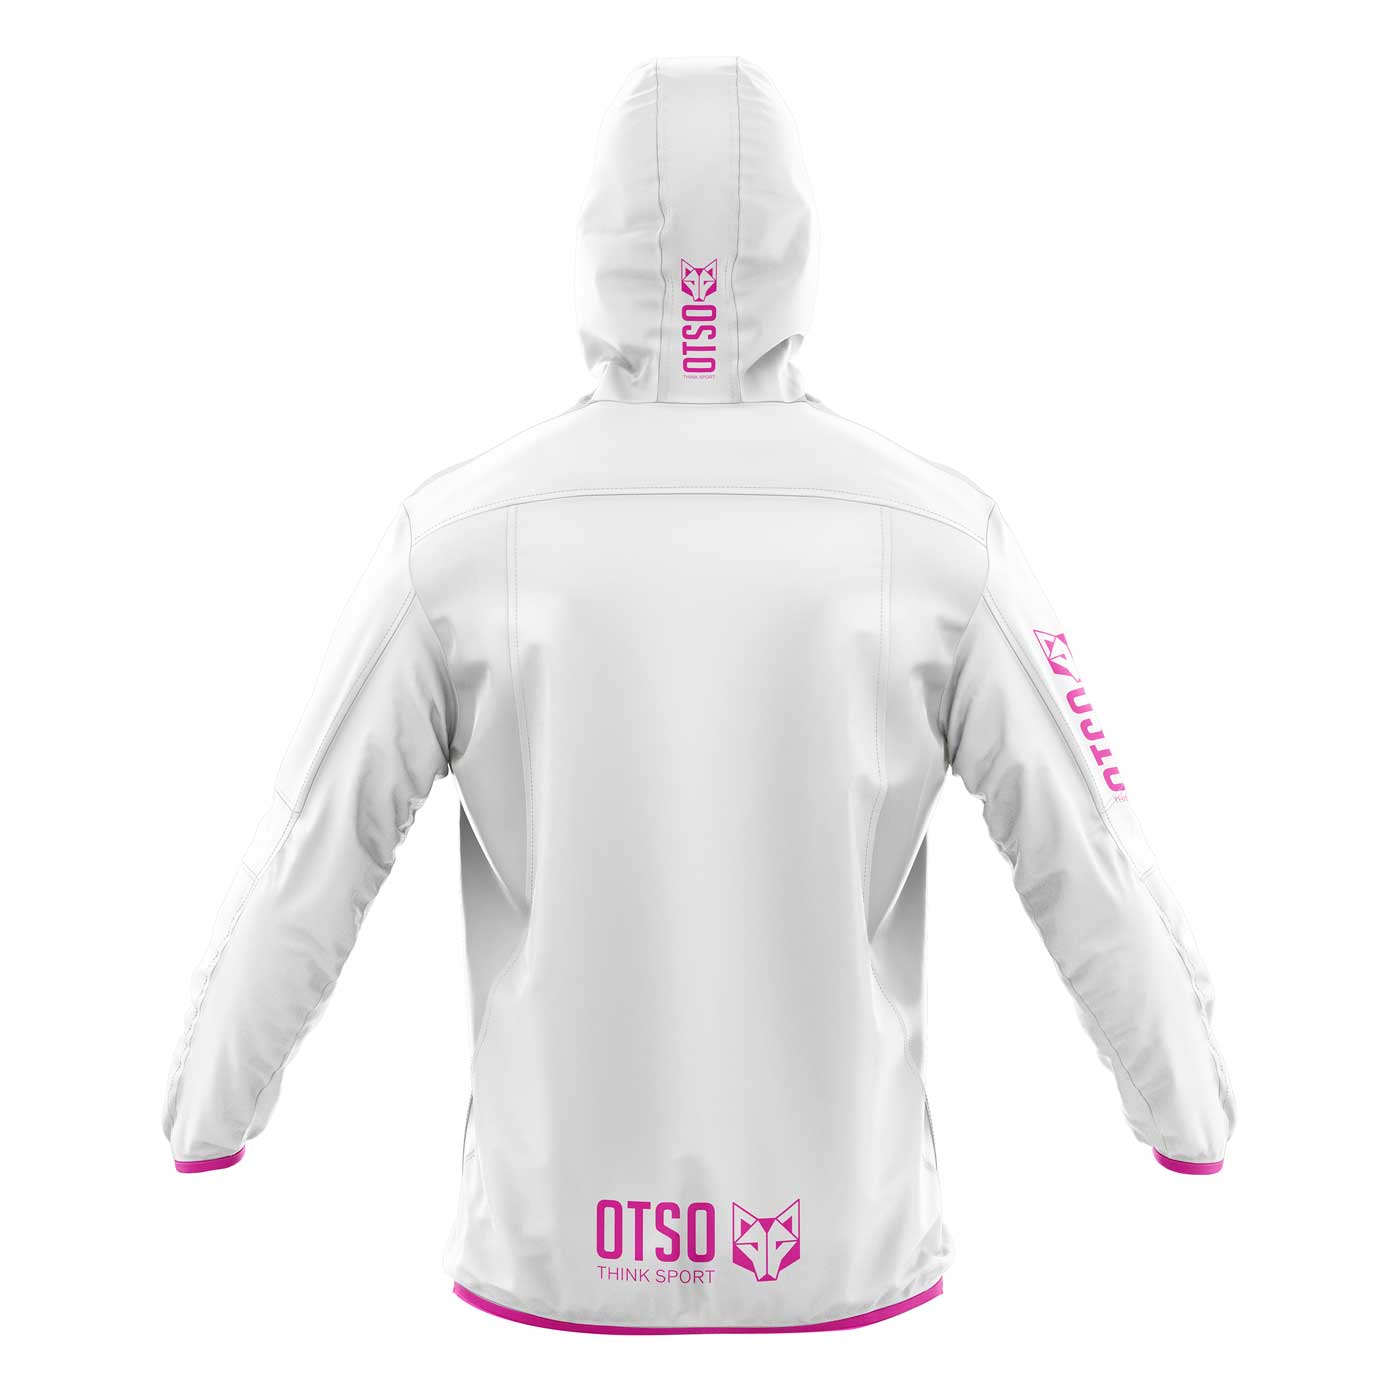 Waterproof Jacket - White & Fluo Pink